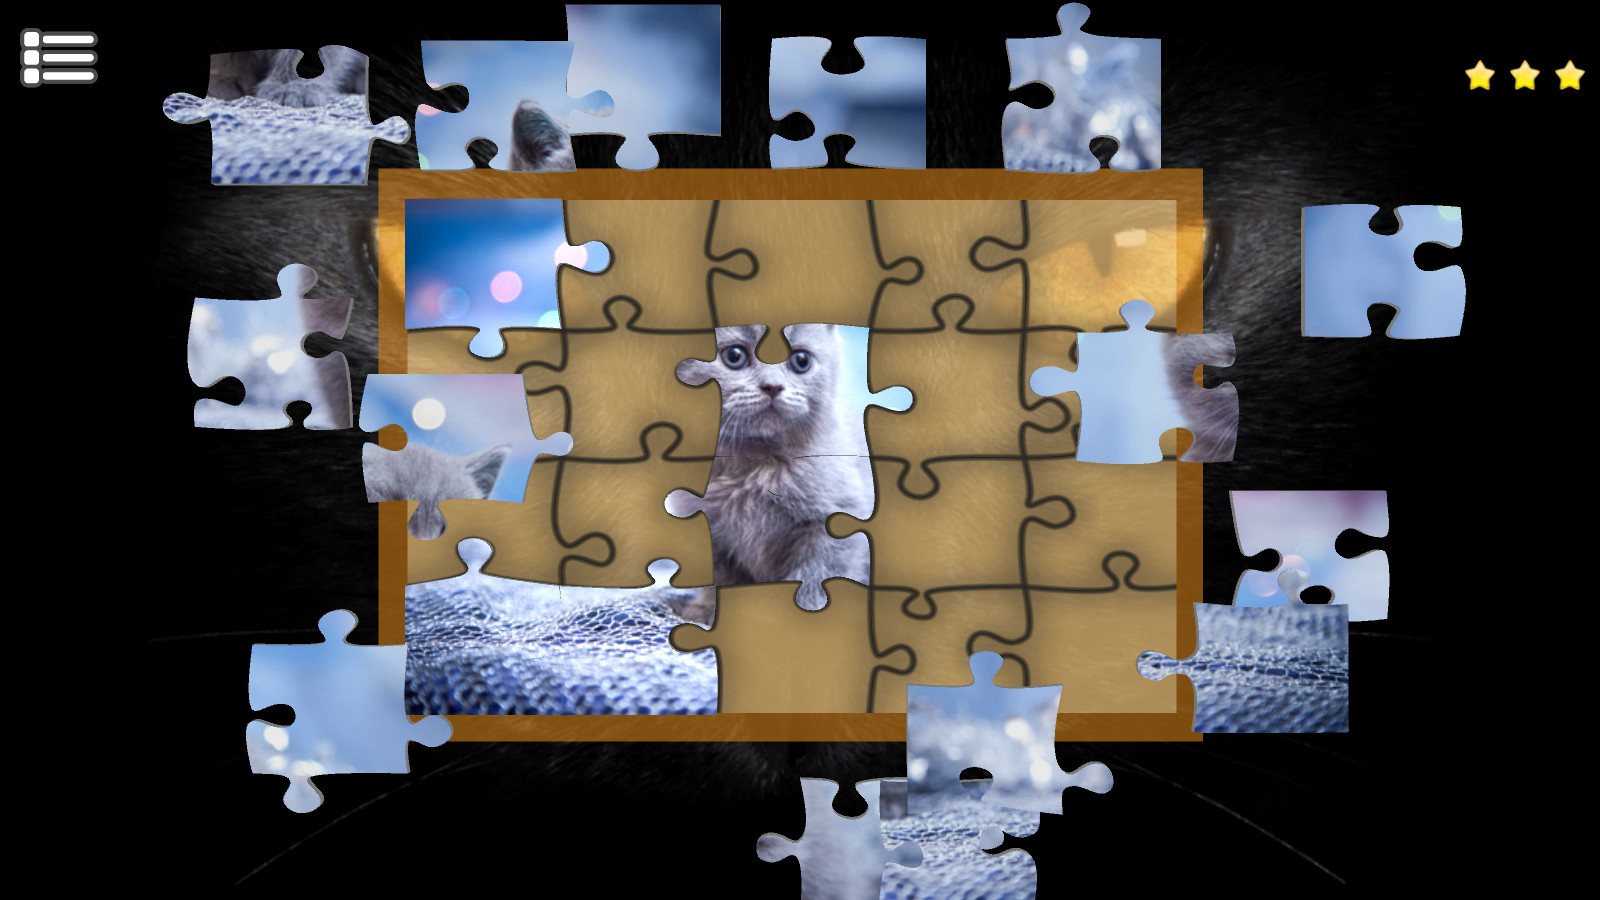 Kitty Cat: Jigsaw Puzzles Steam CD Key